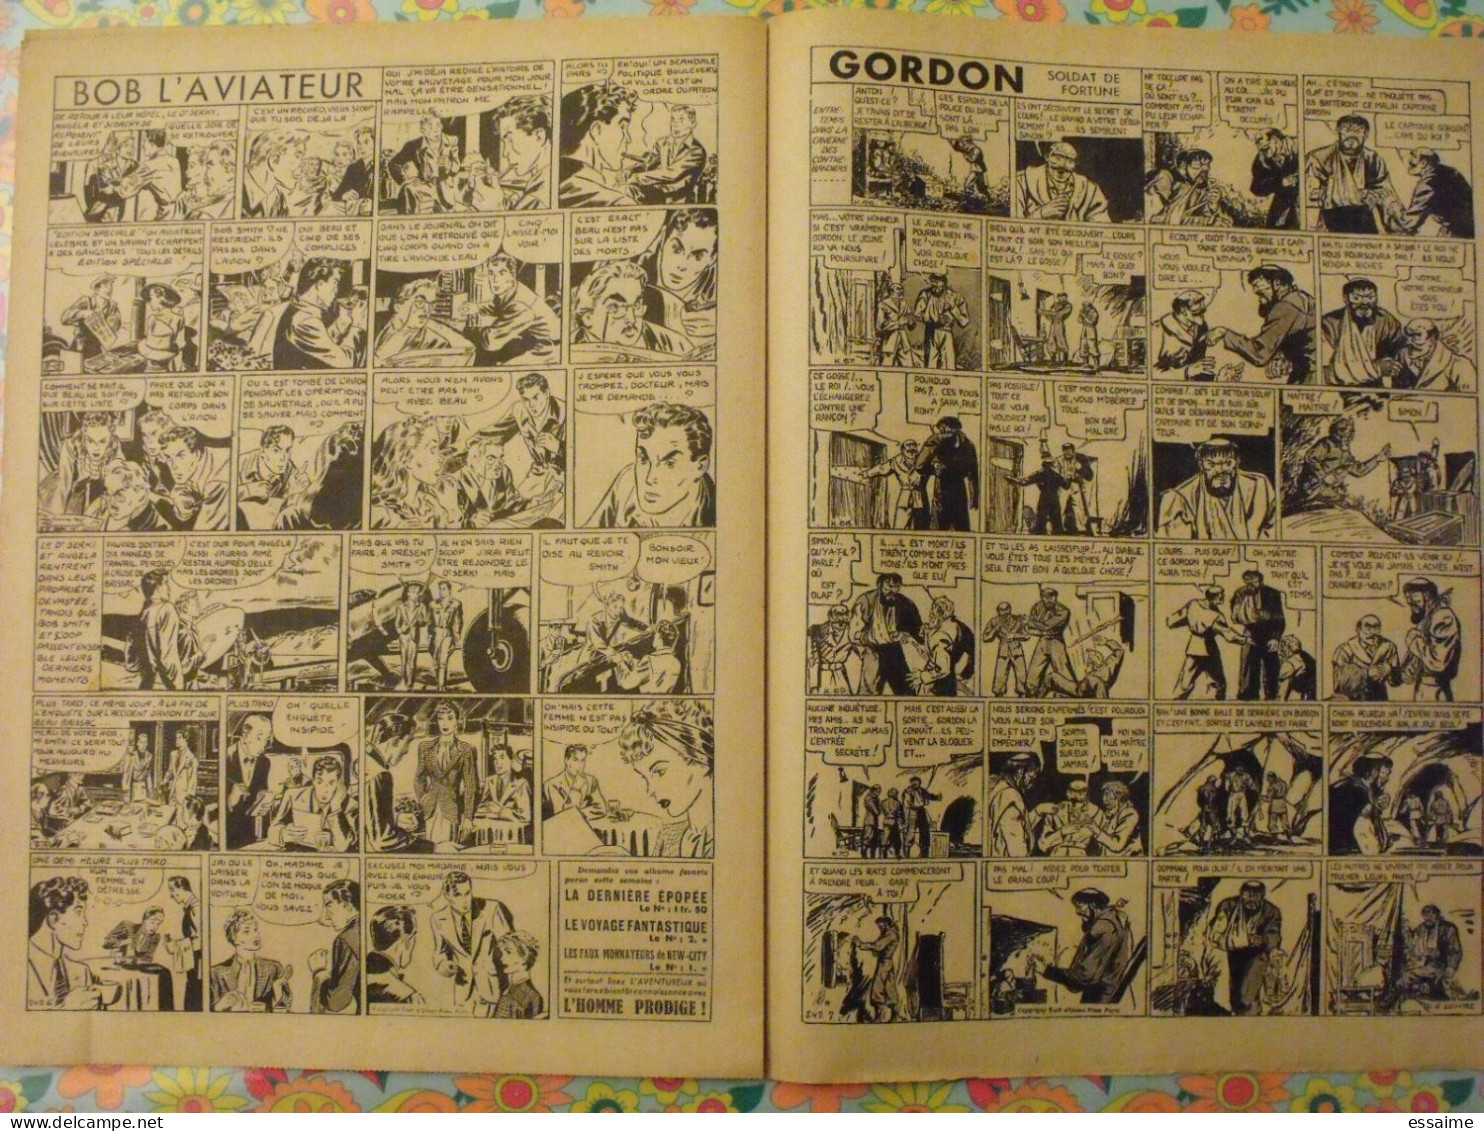 5 n° de Hurrah ! de 1939-40. Brick Bradford, Tarzan, le roi de la police montée, gordon. A redécouvrir